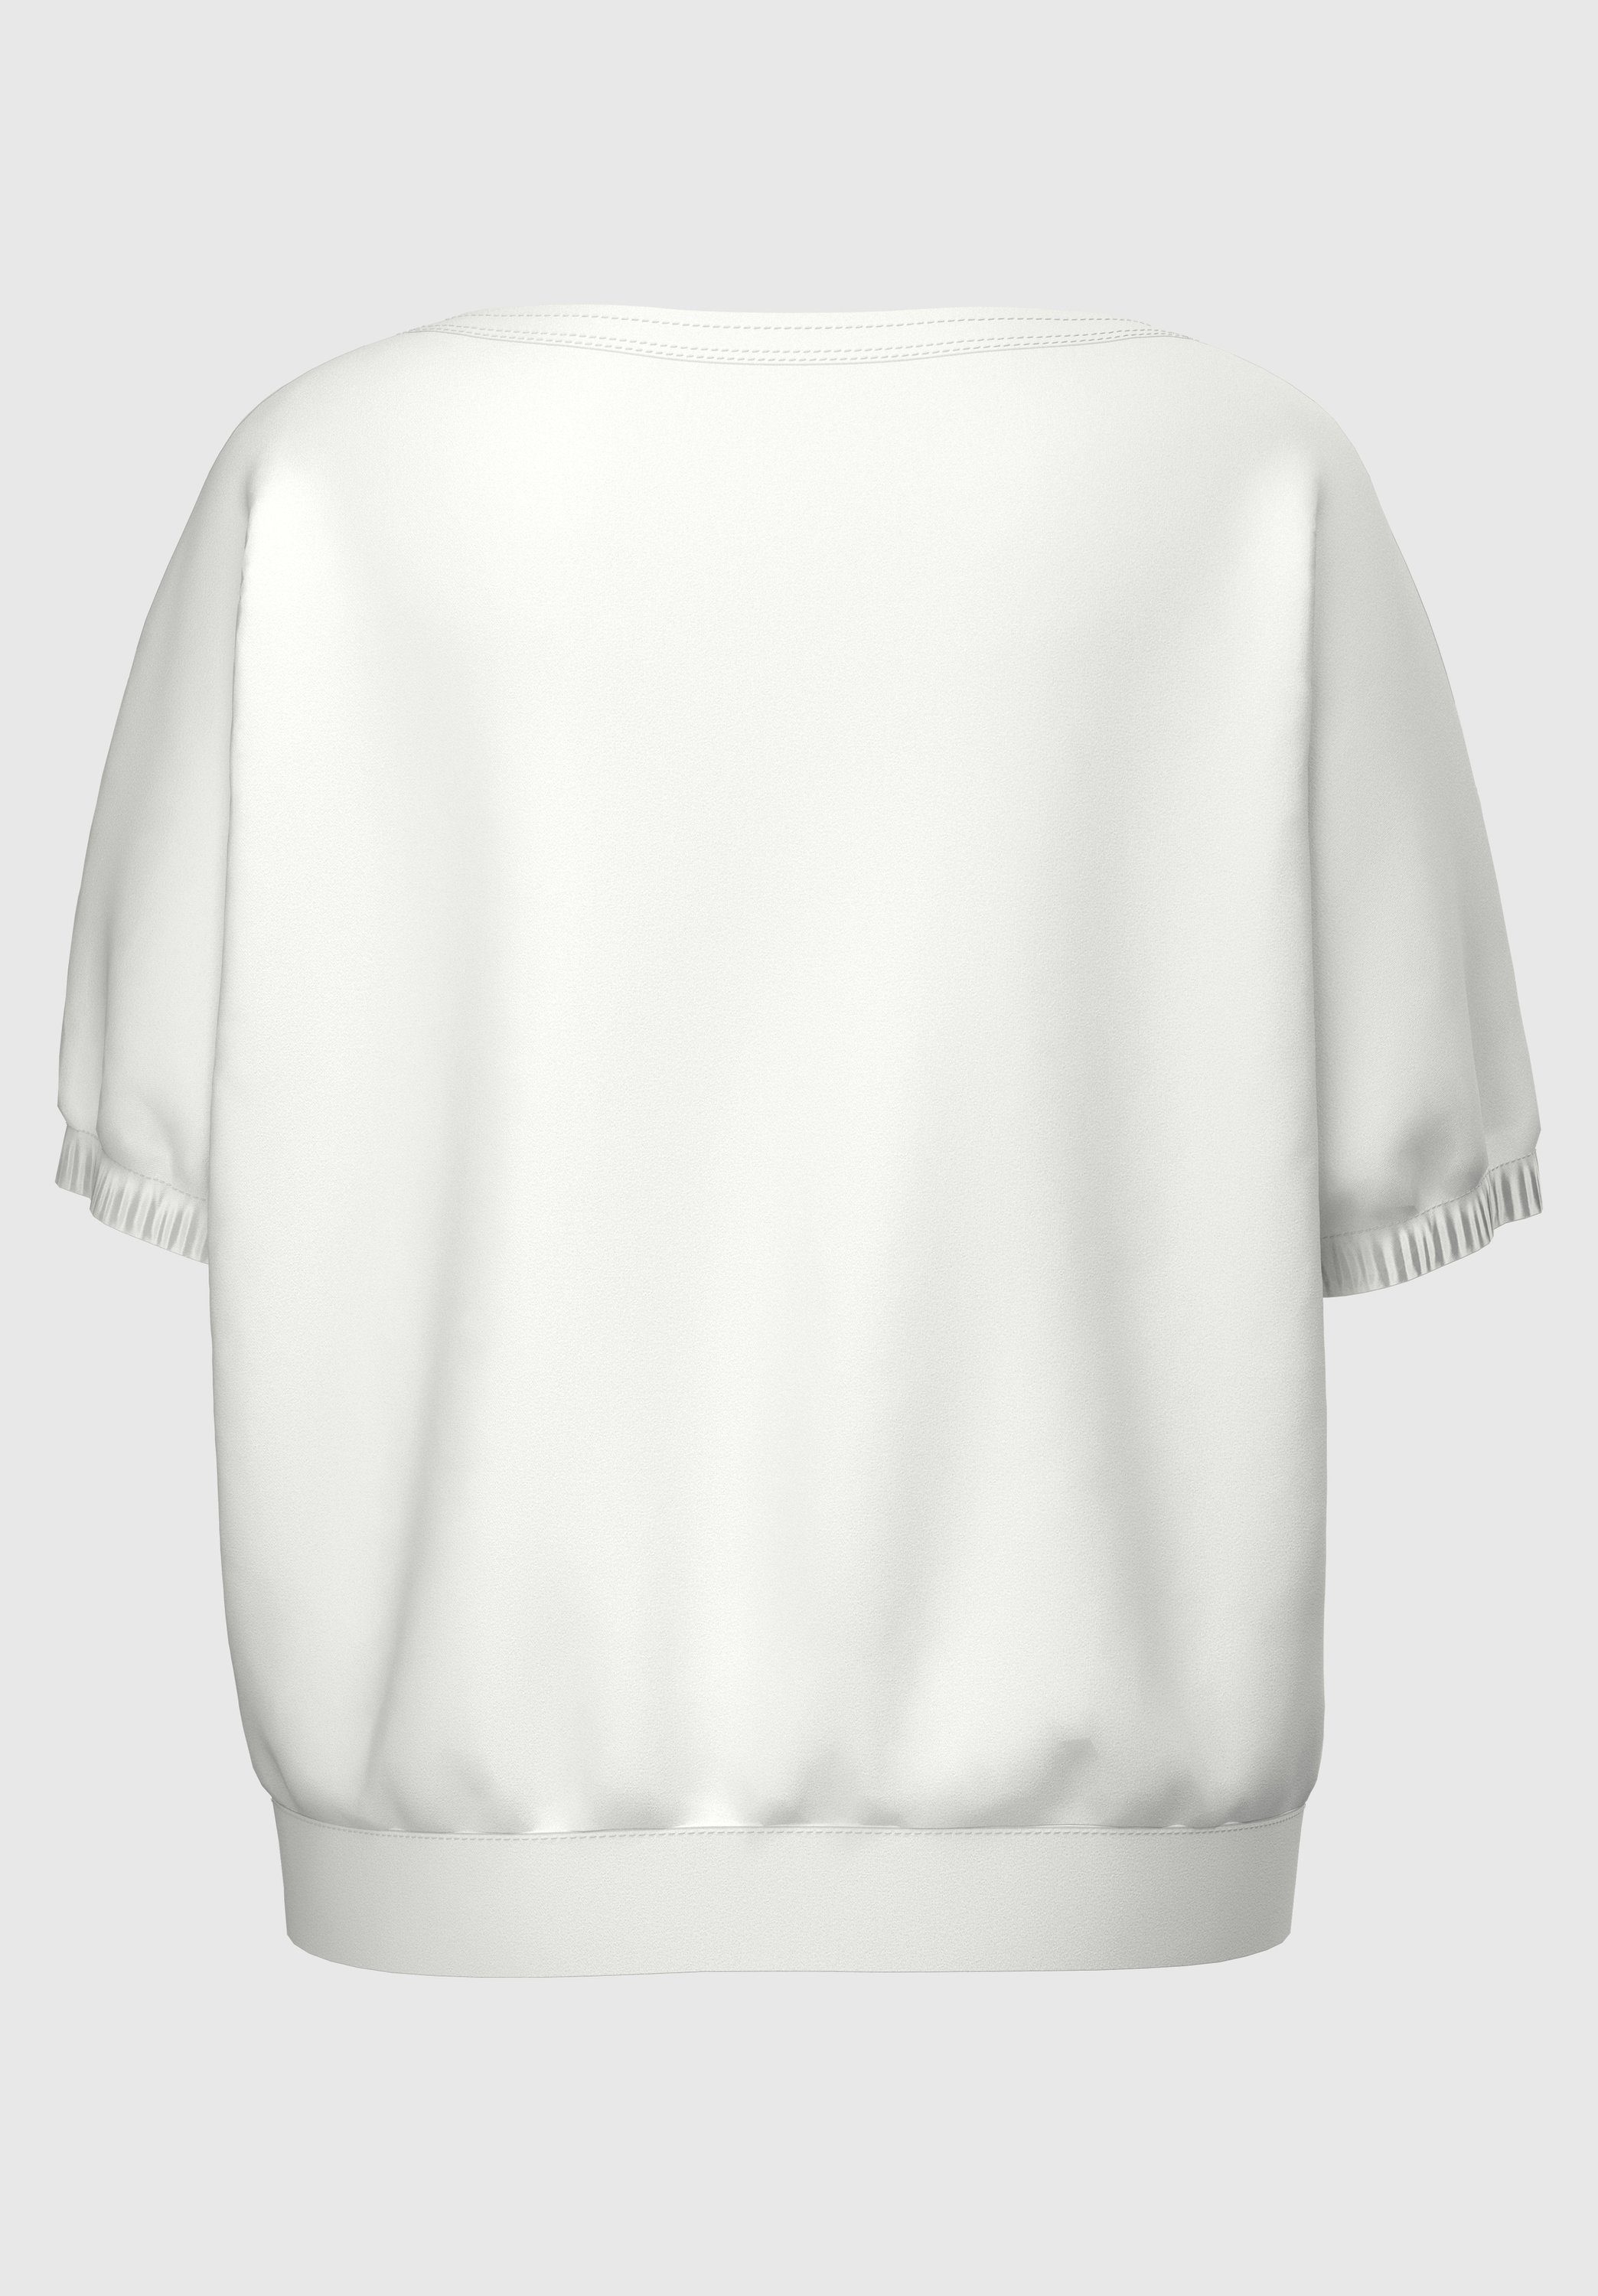 Print-Shirt Frontmotiv Wording und mit farbigem coolem bianca CHRISTINA